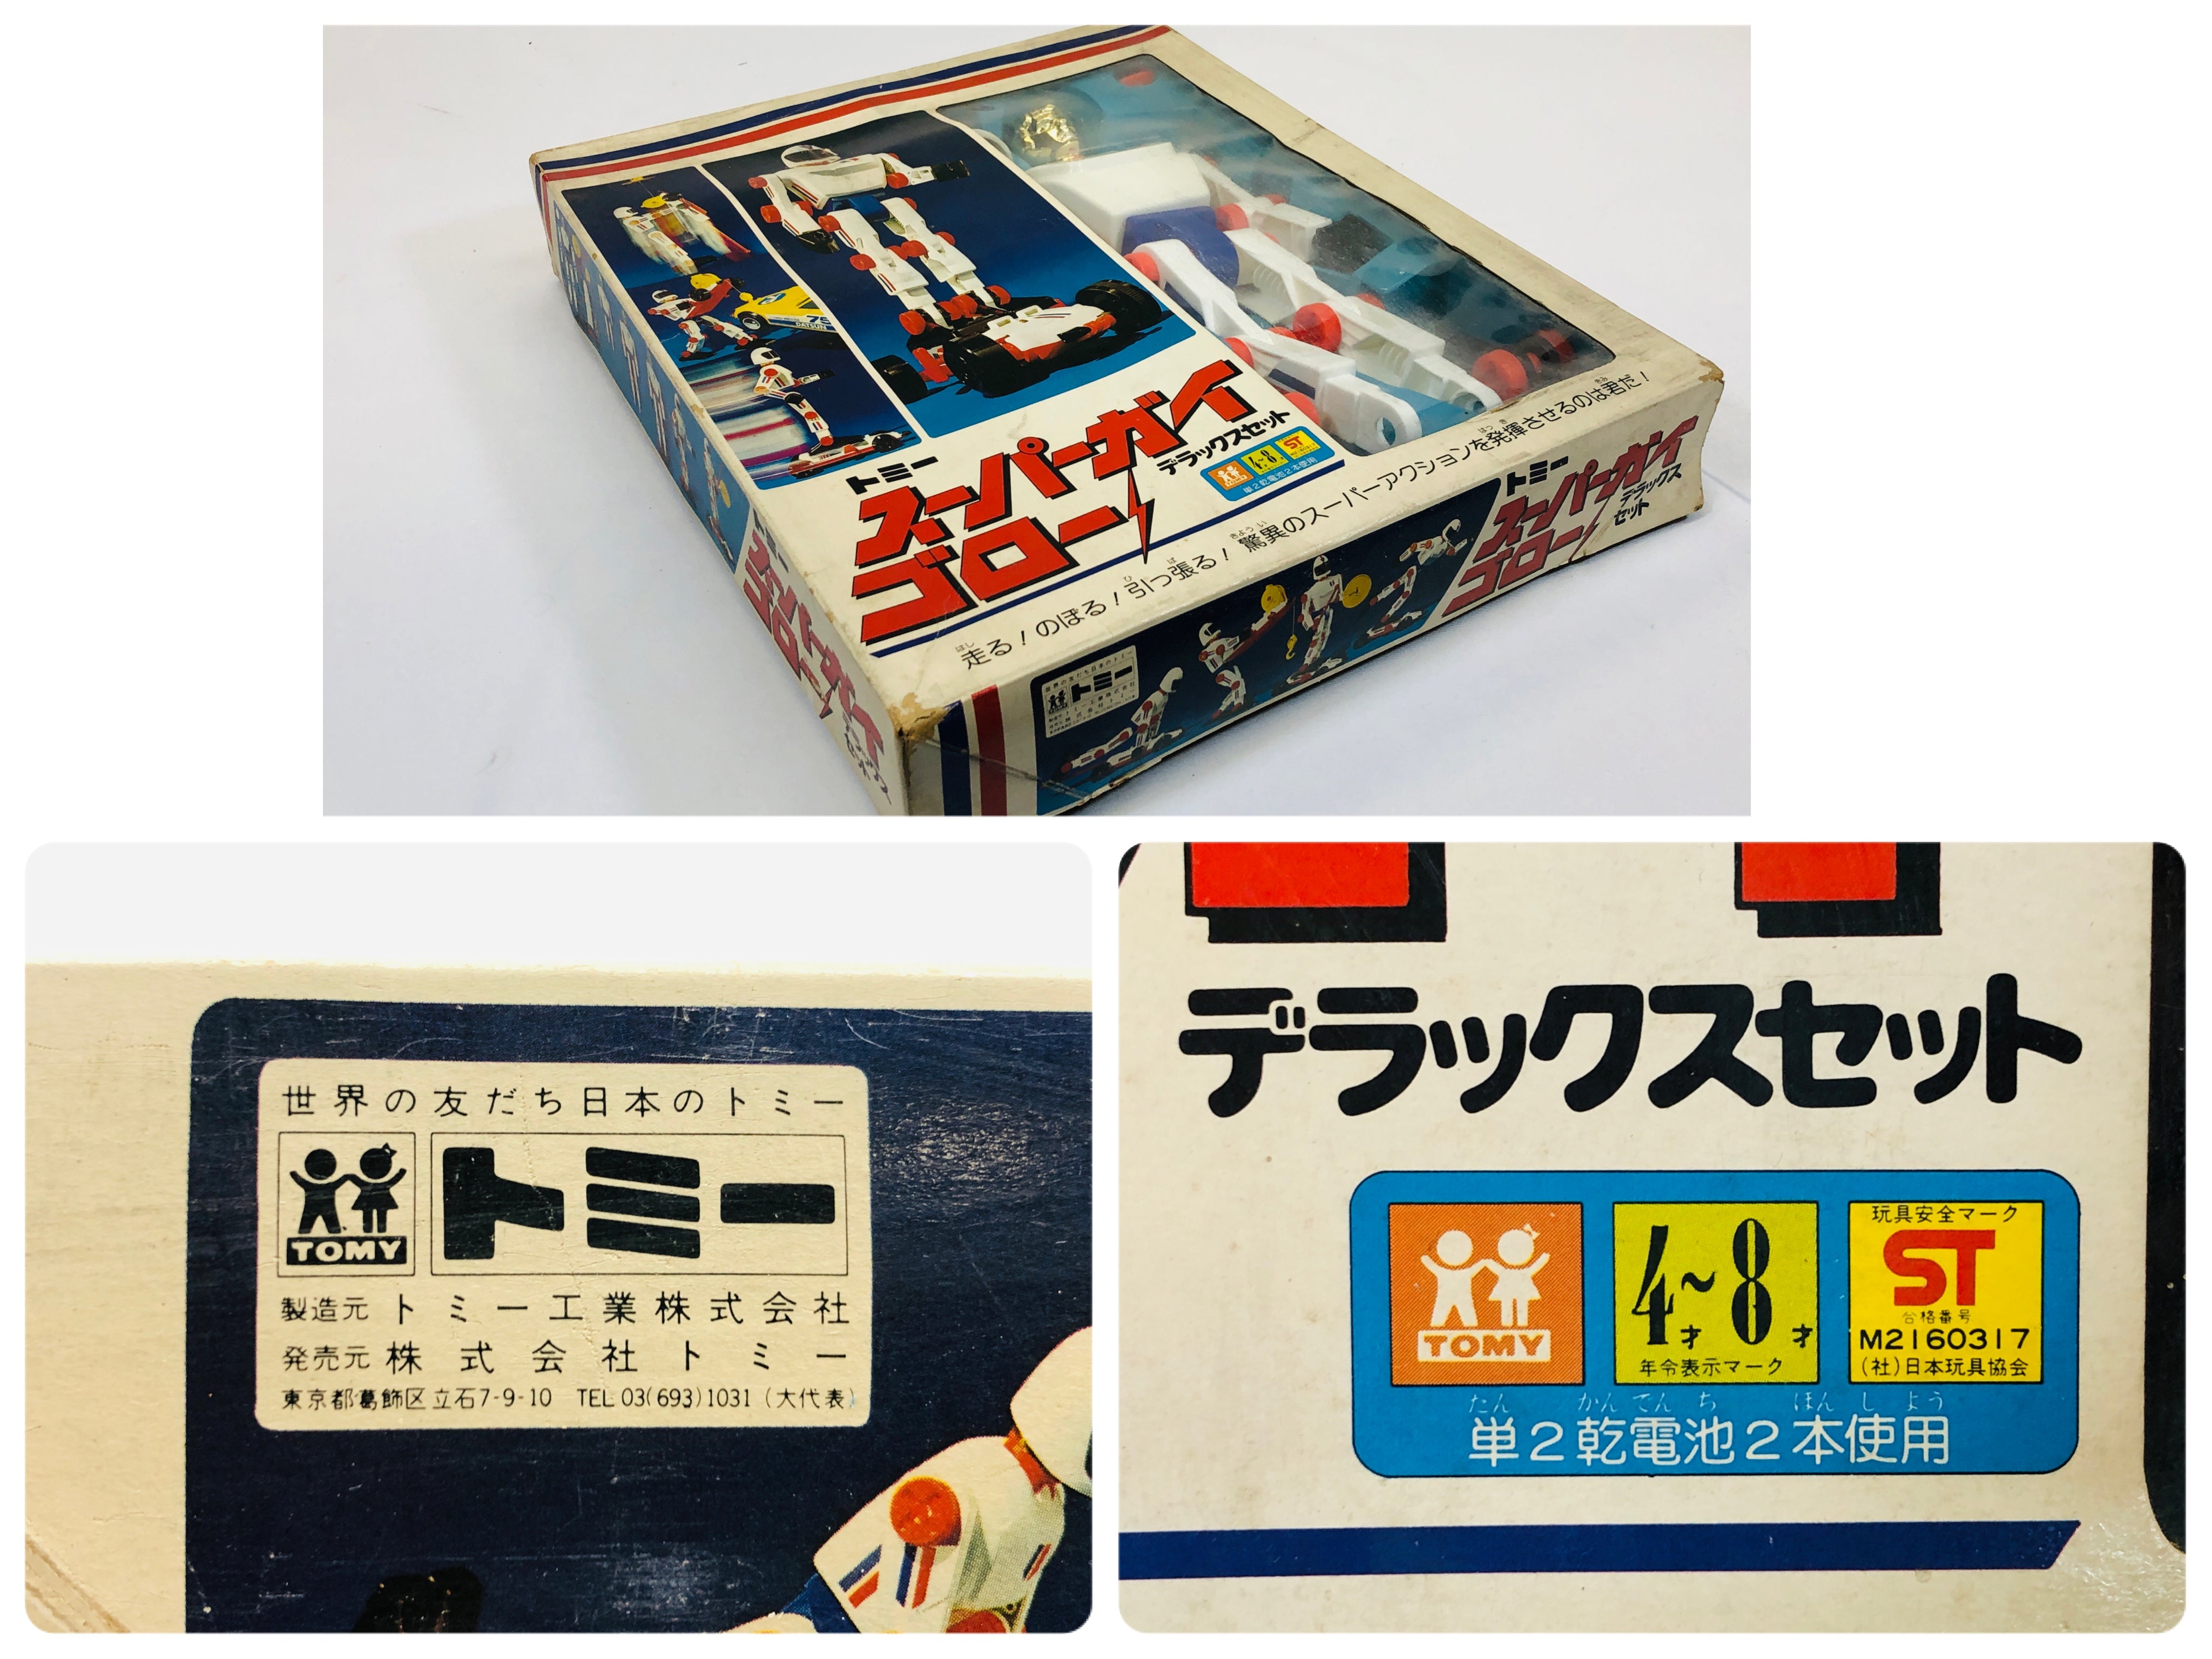 Y5222 TOY TOMY Super Guy Goro action figure box Japan antique vintage robot